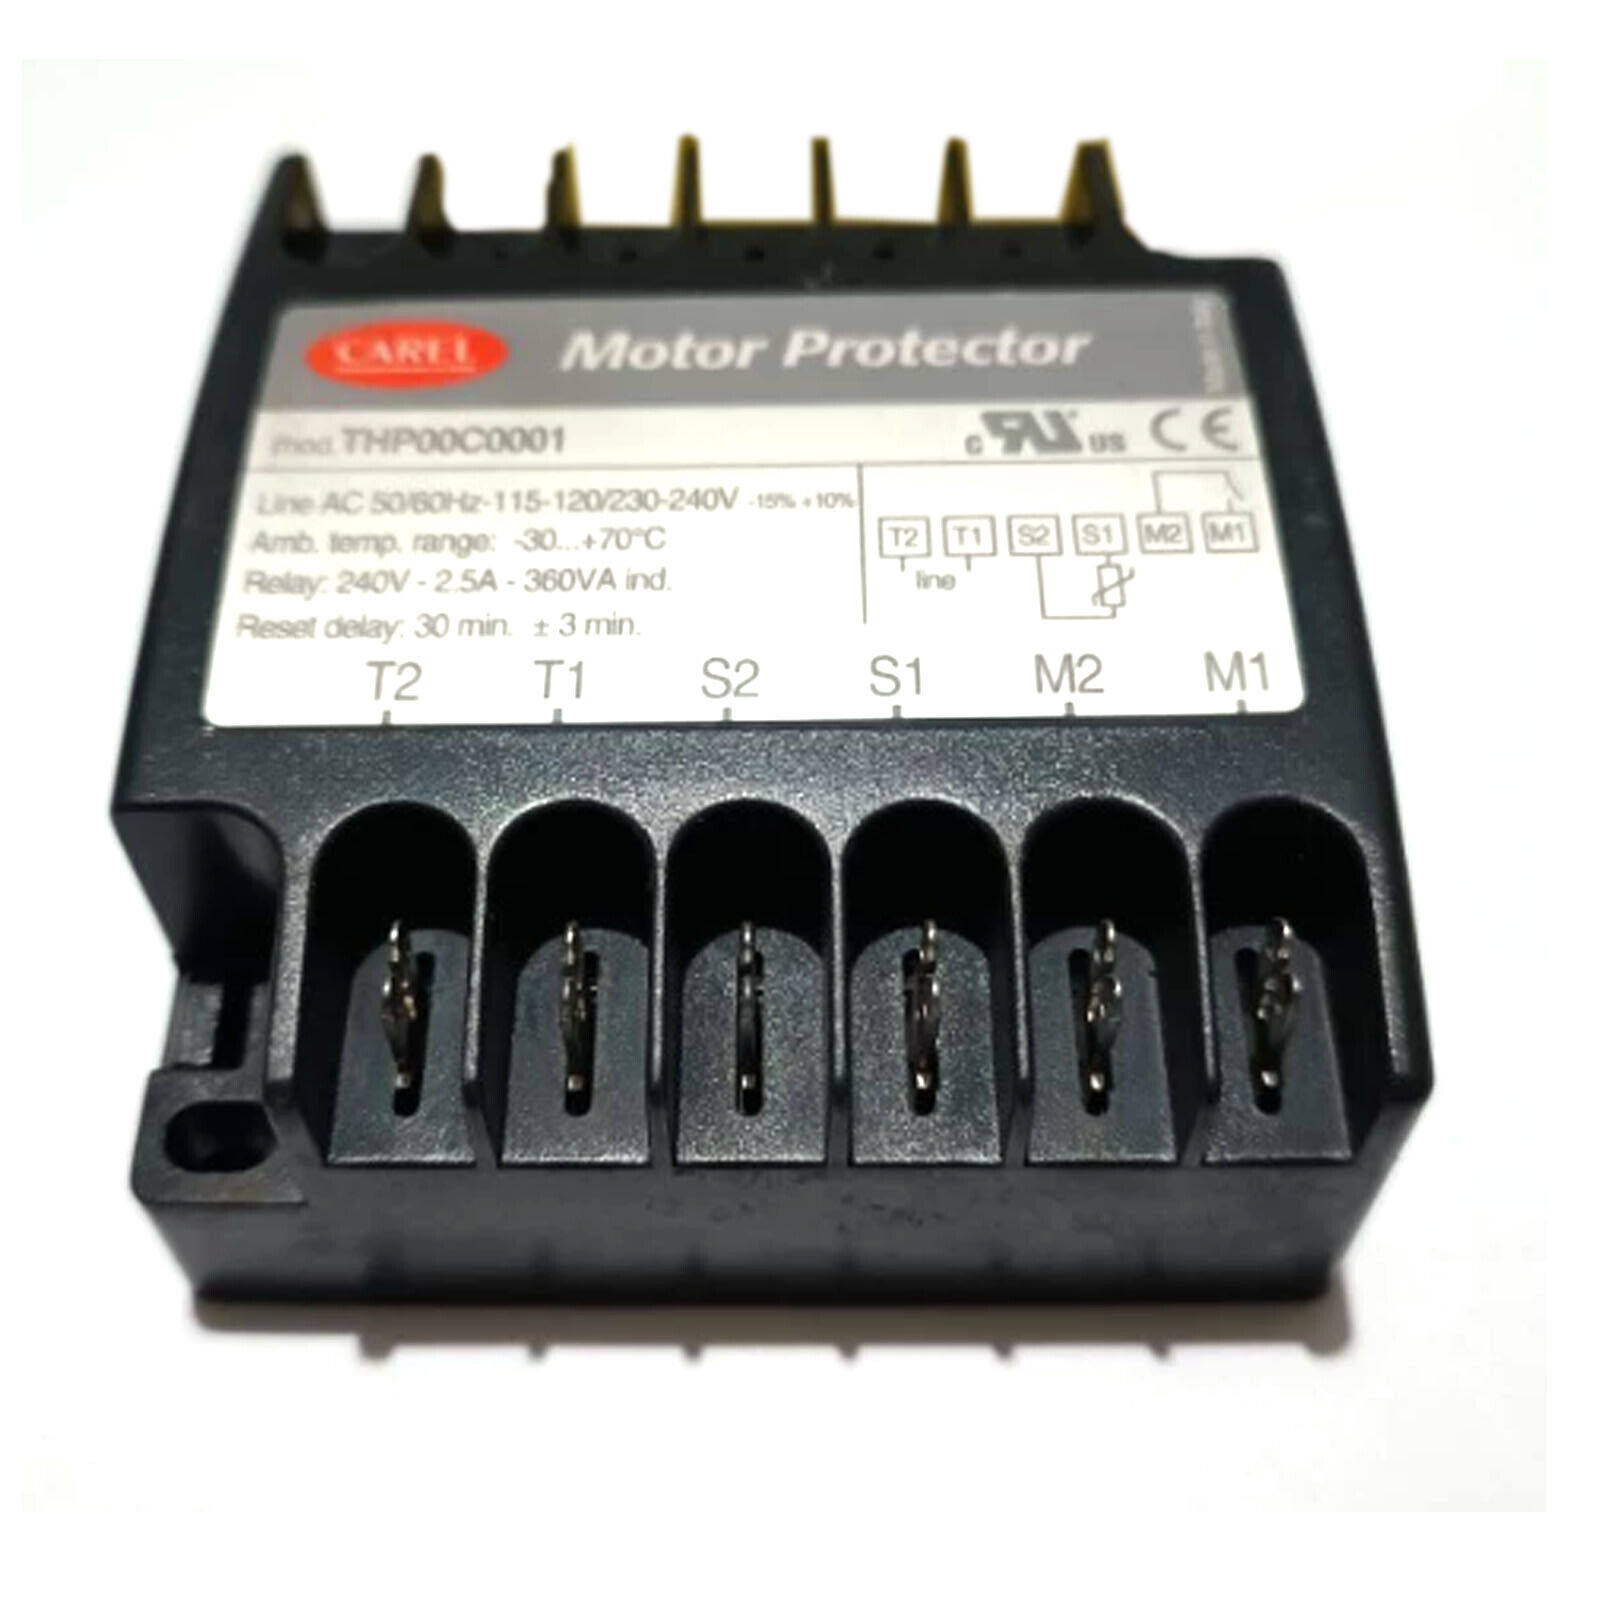 Carel THP00C0001 Motor Protector 50/60 Hz 240/360 Volts